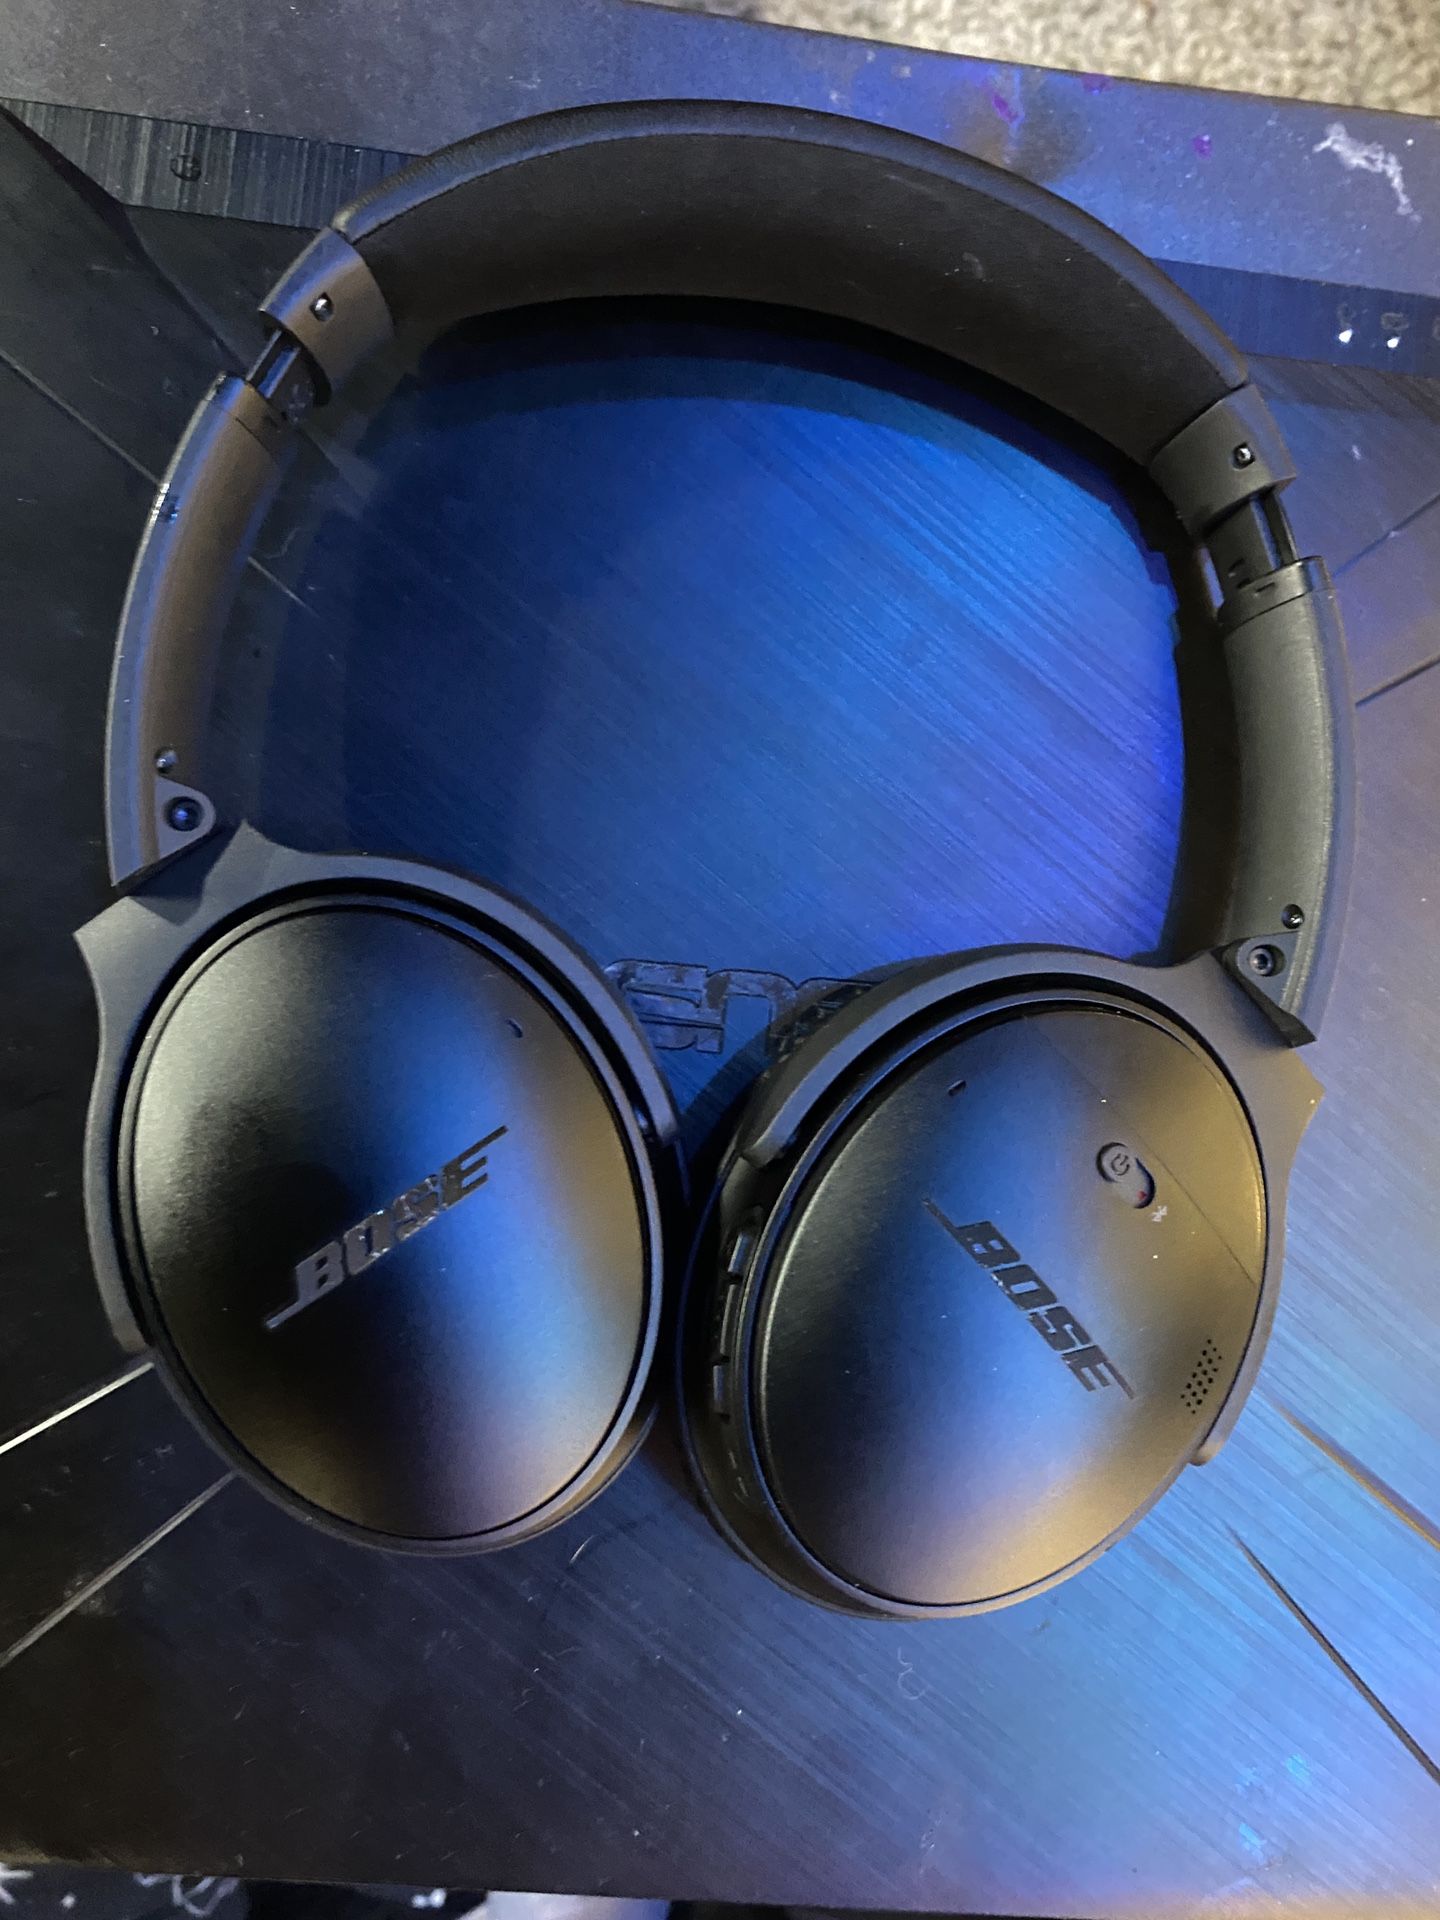 Bose Quiet comfort 35 Headphones Noise Cancelling 